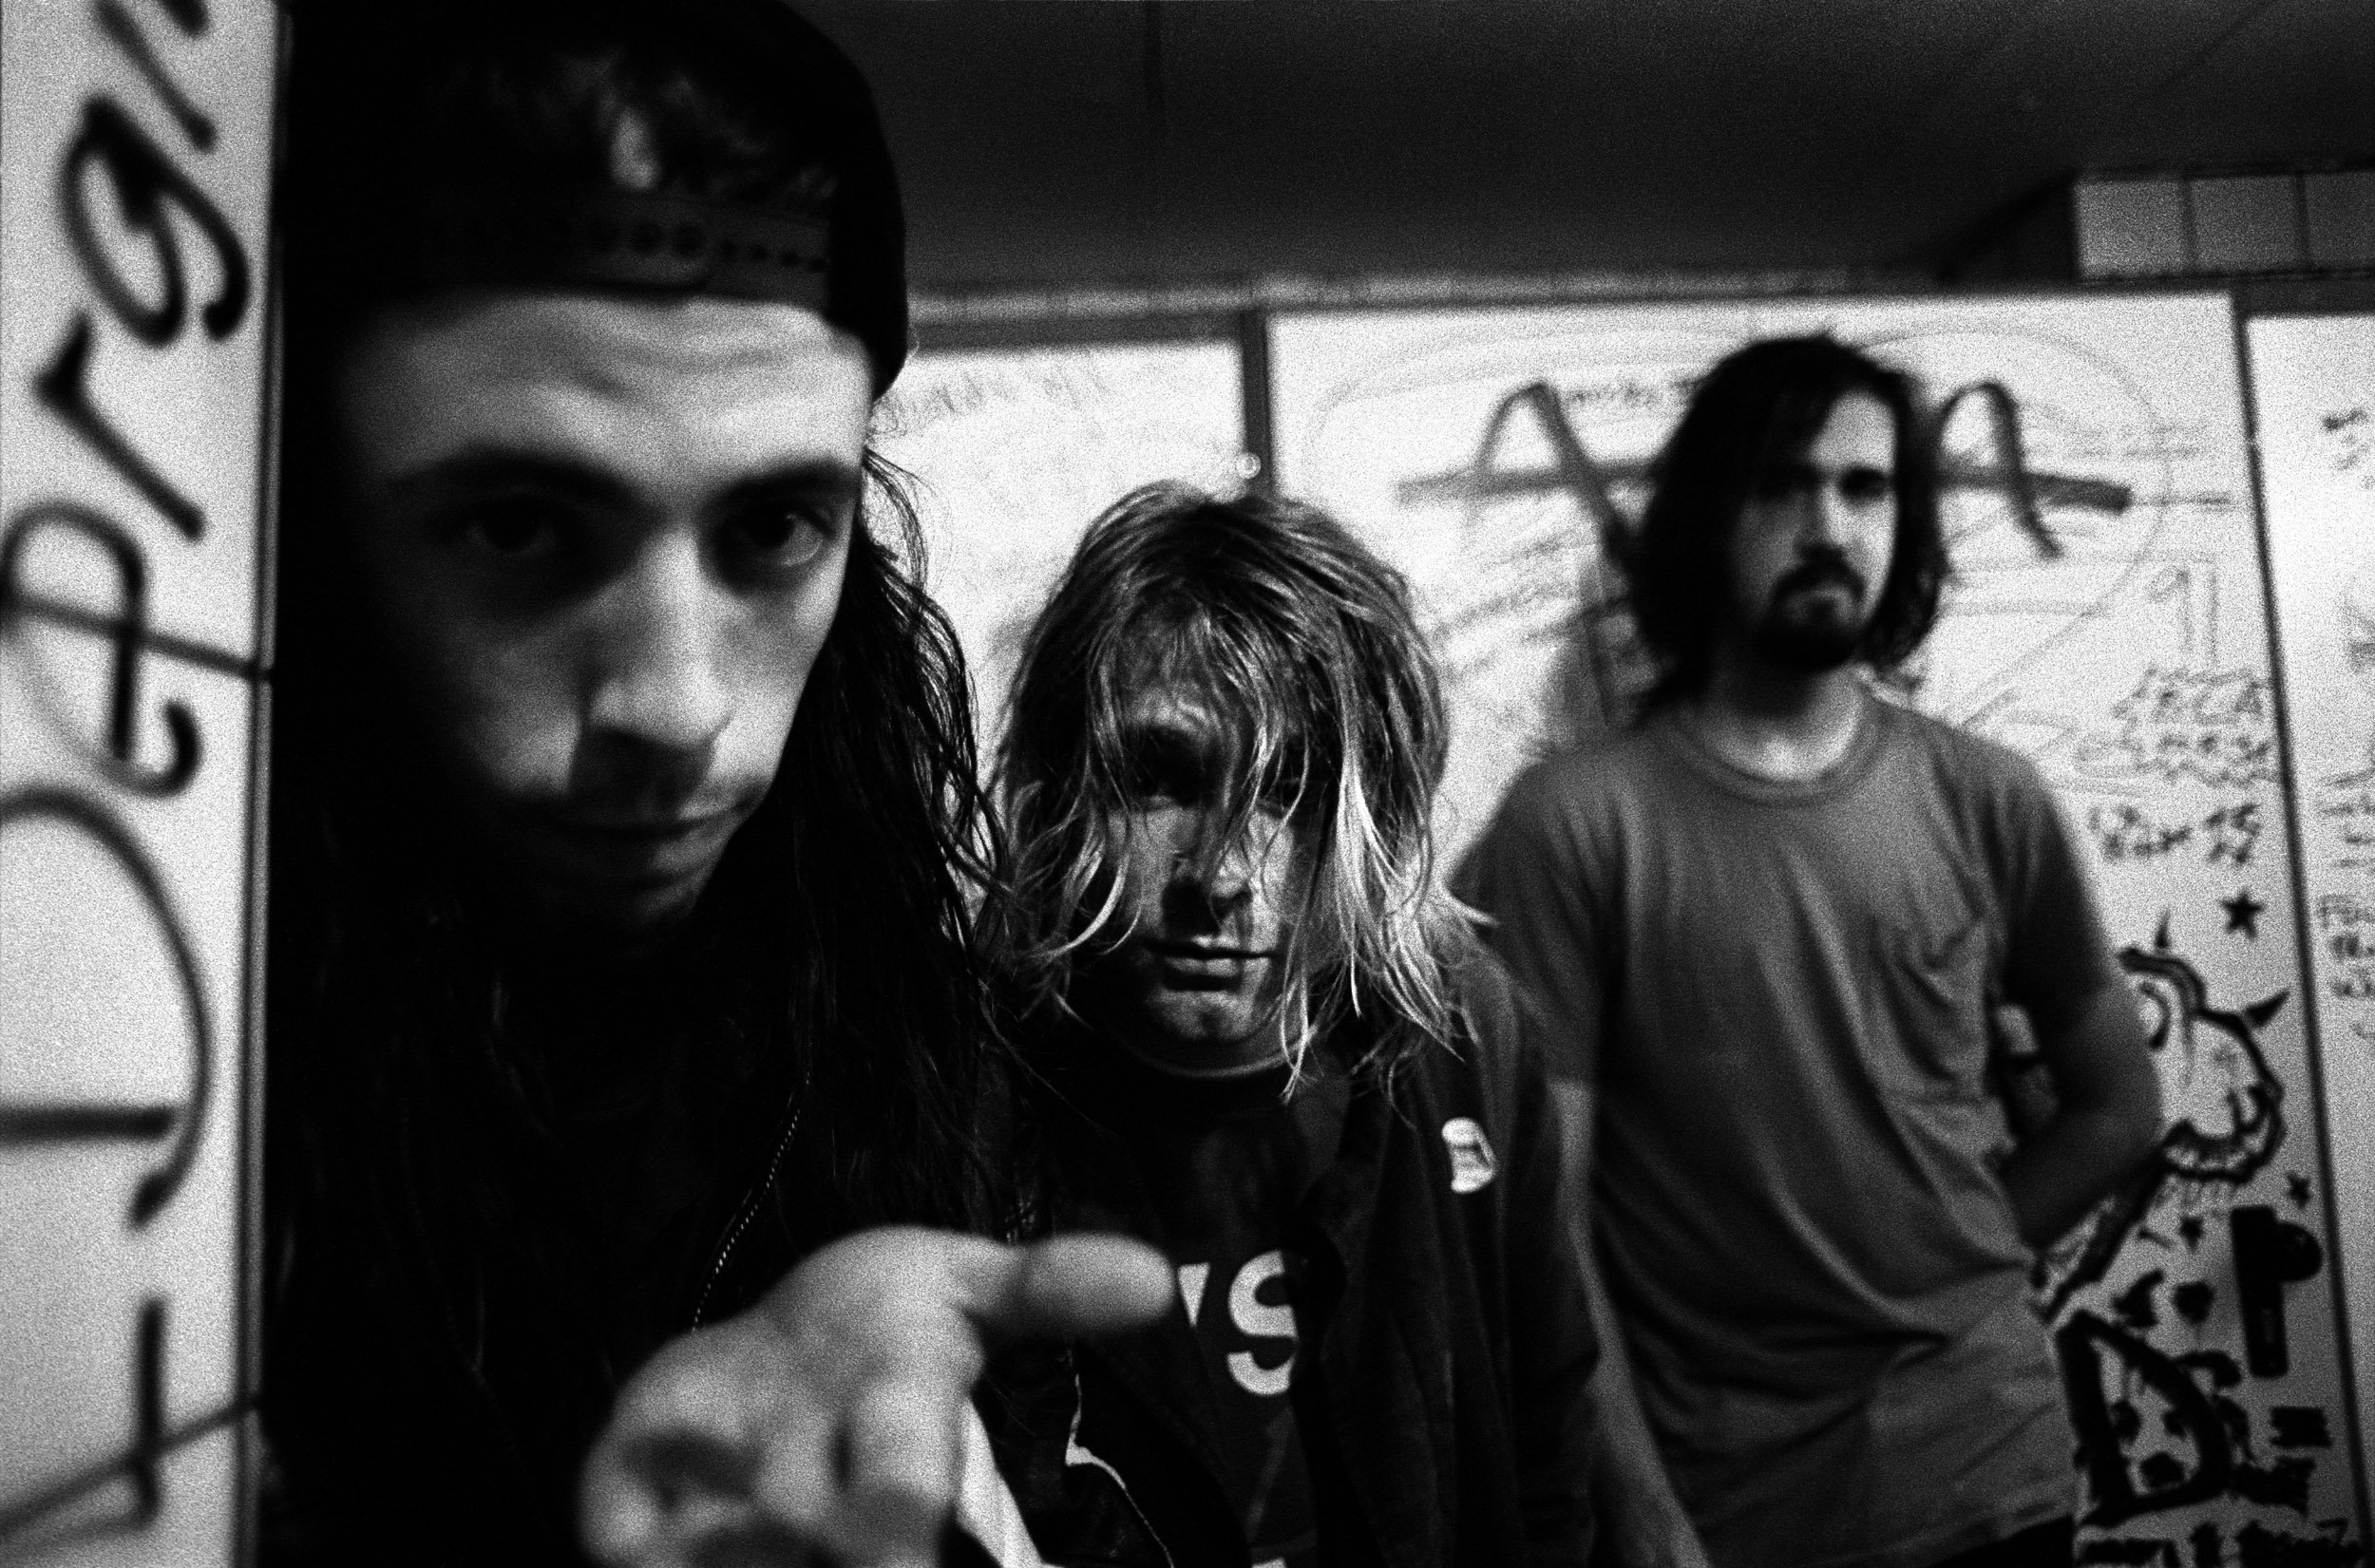 Nirvana's Dave Grohl, Kurt Cobain, and Krist Novoselic near graffiti